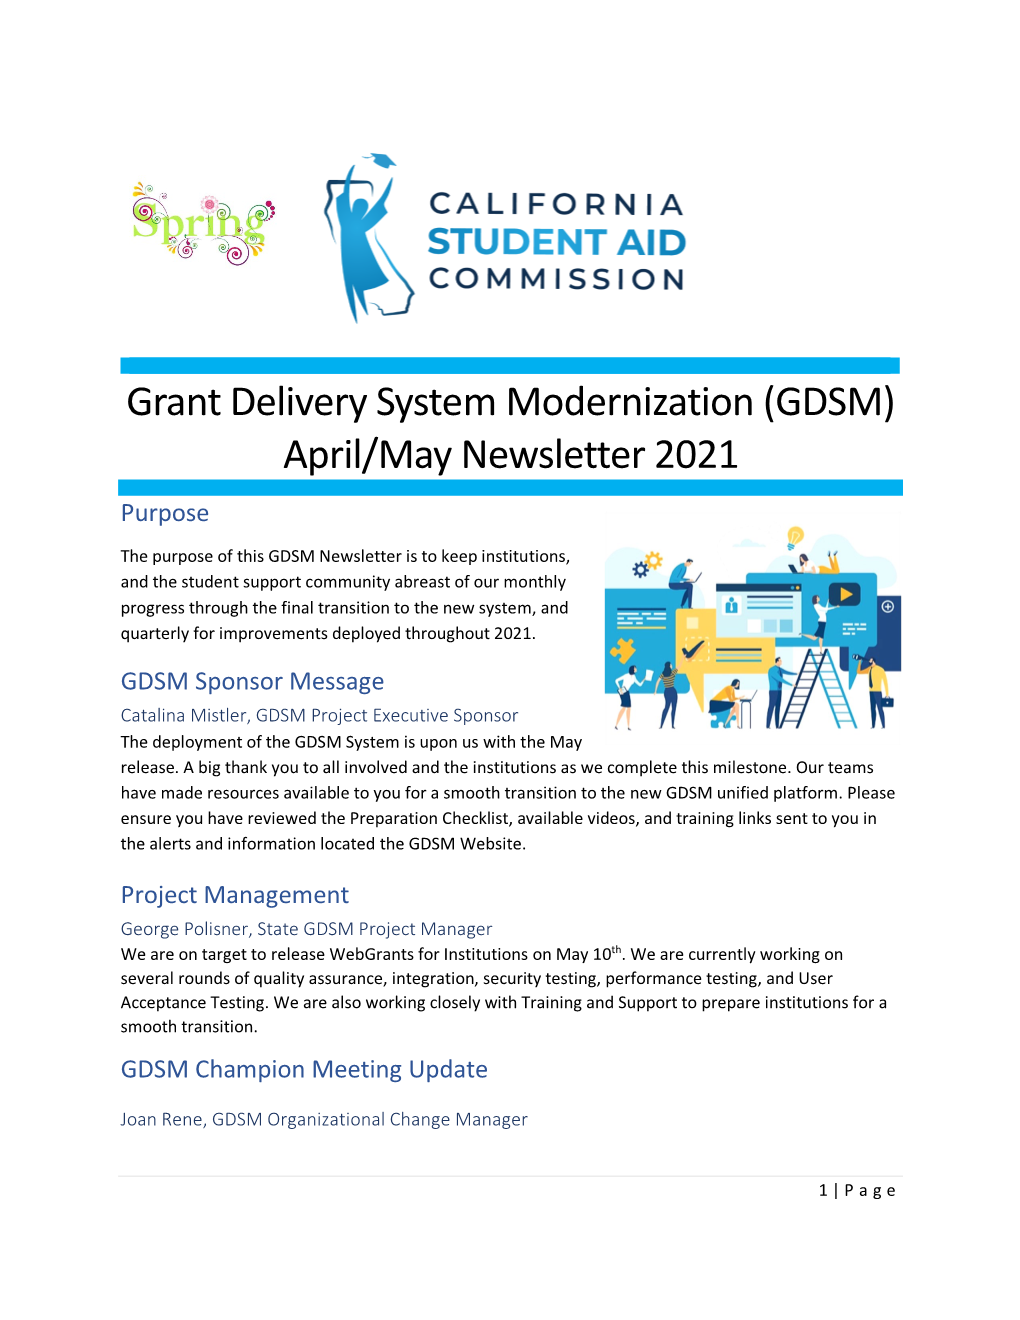 GDSM April/May Newsletter